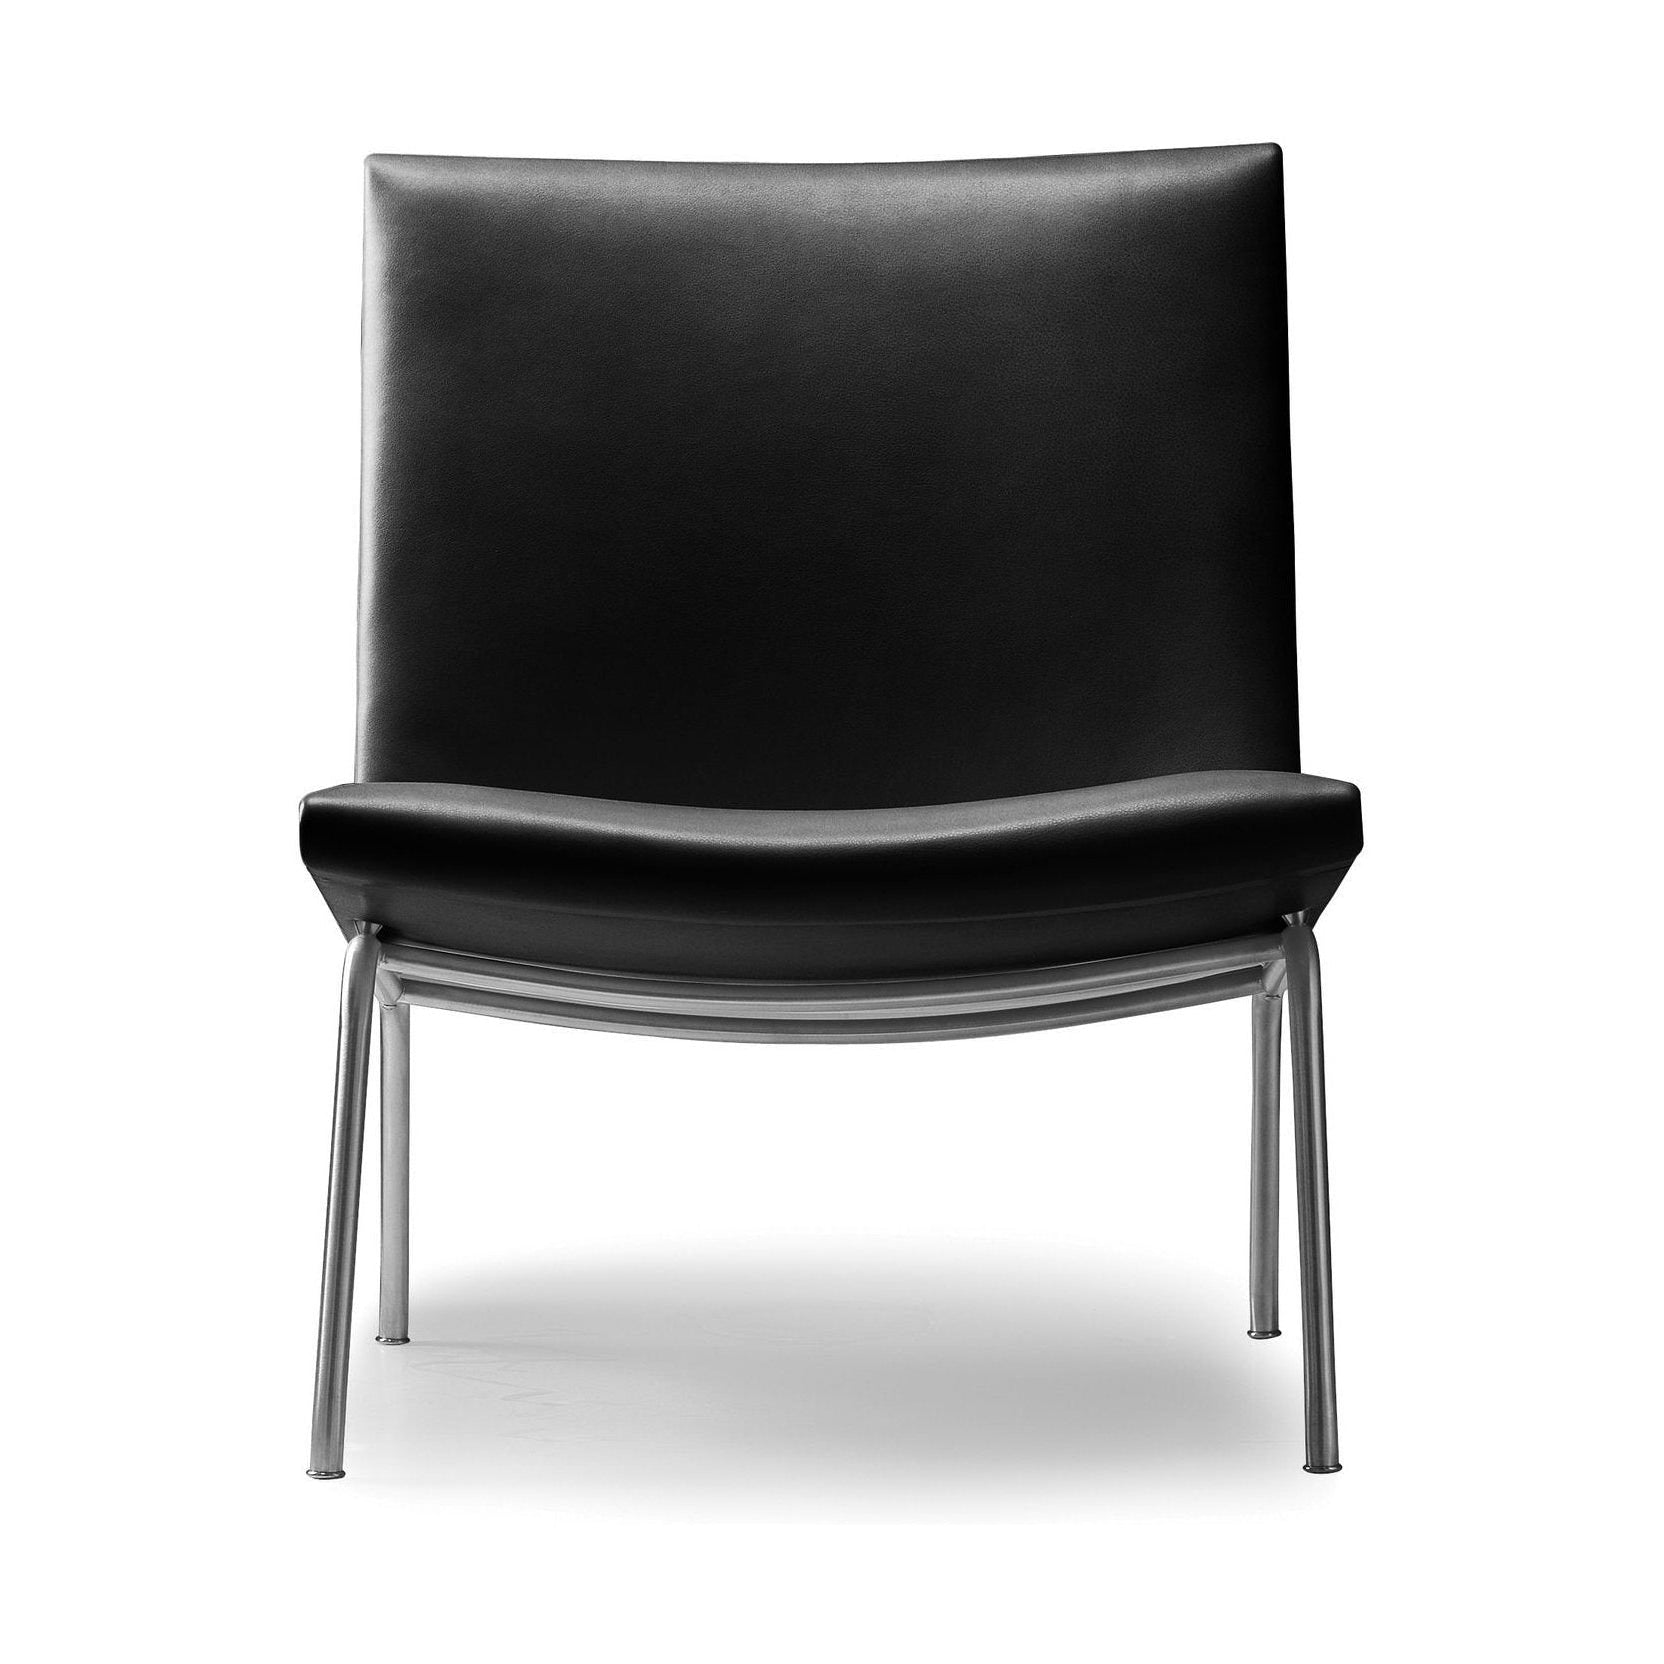 Carl Hansen Ch401 chaise salon Kastrup, acier inoxydable / cuir noir Thor 301